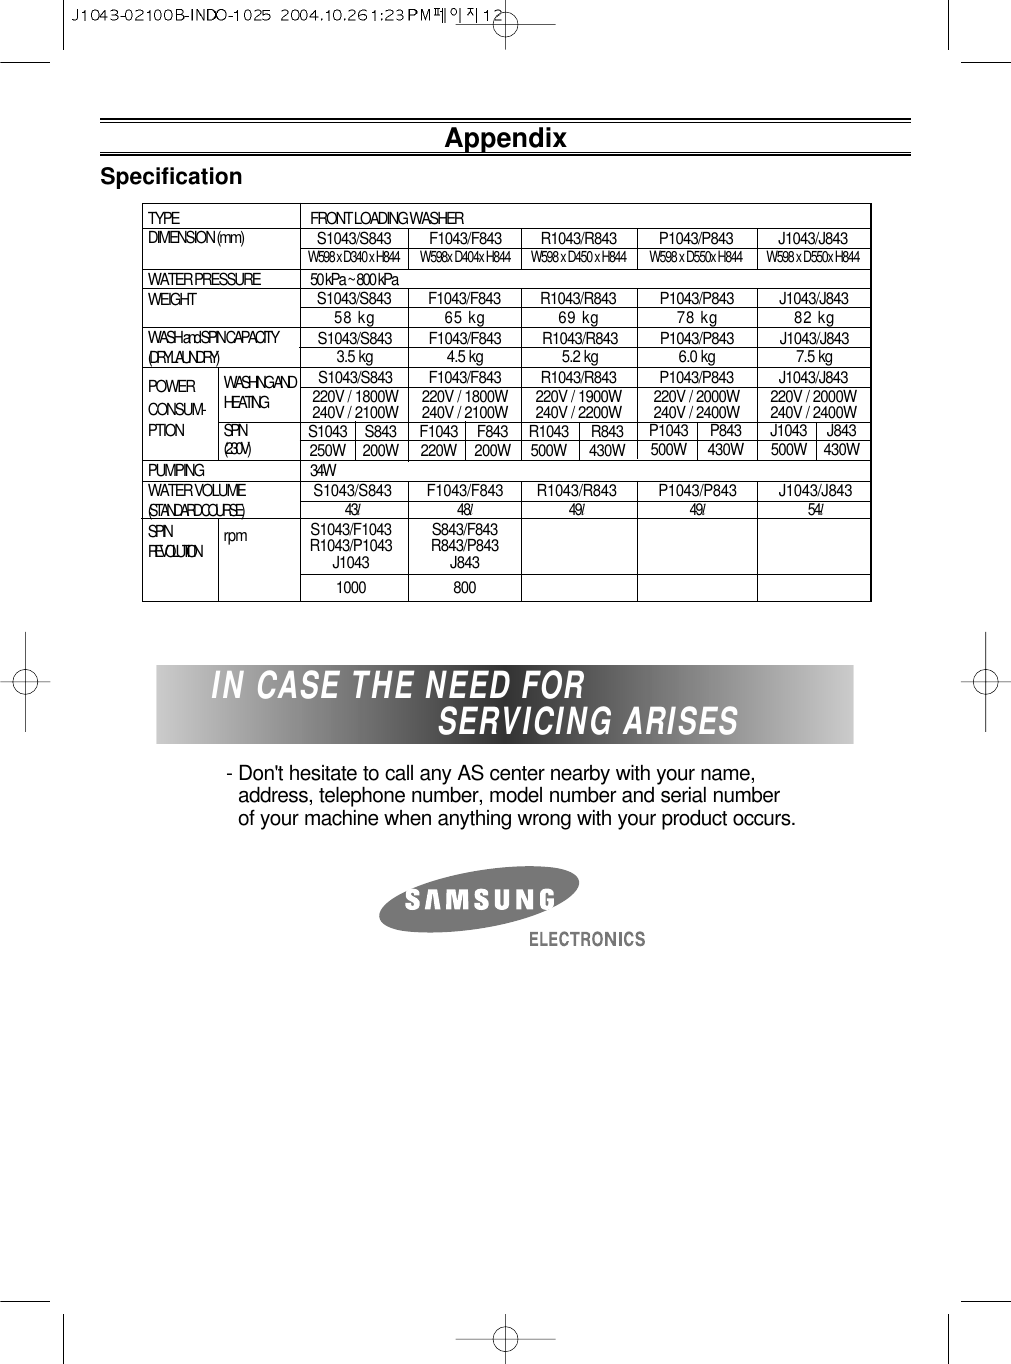 Samsung F1043 F843 Users Manual J1043 02100B INDO 1025